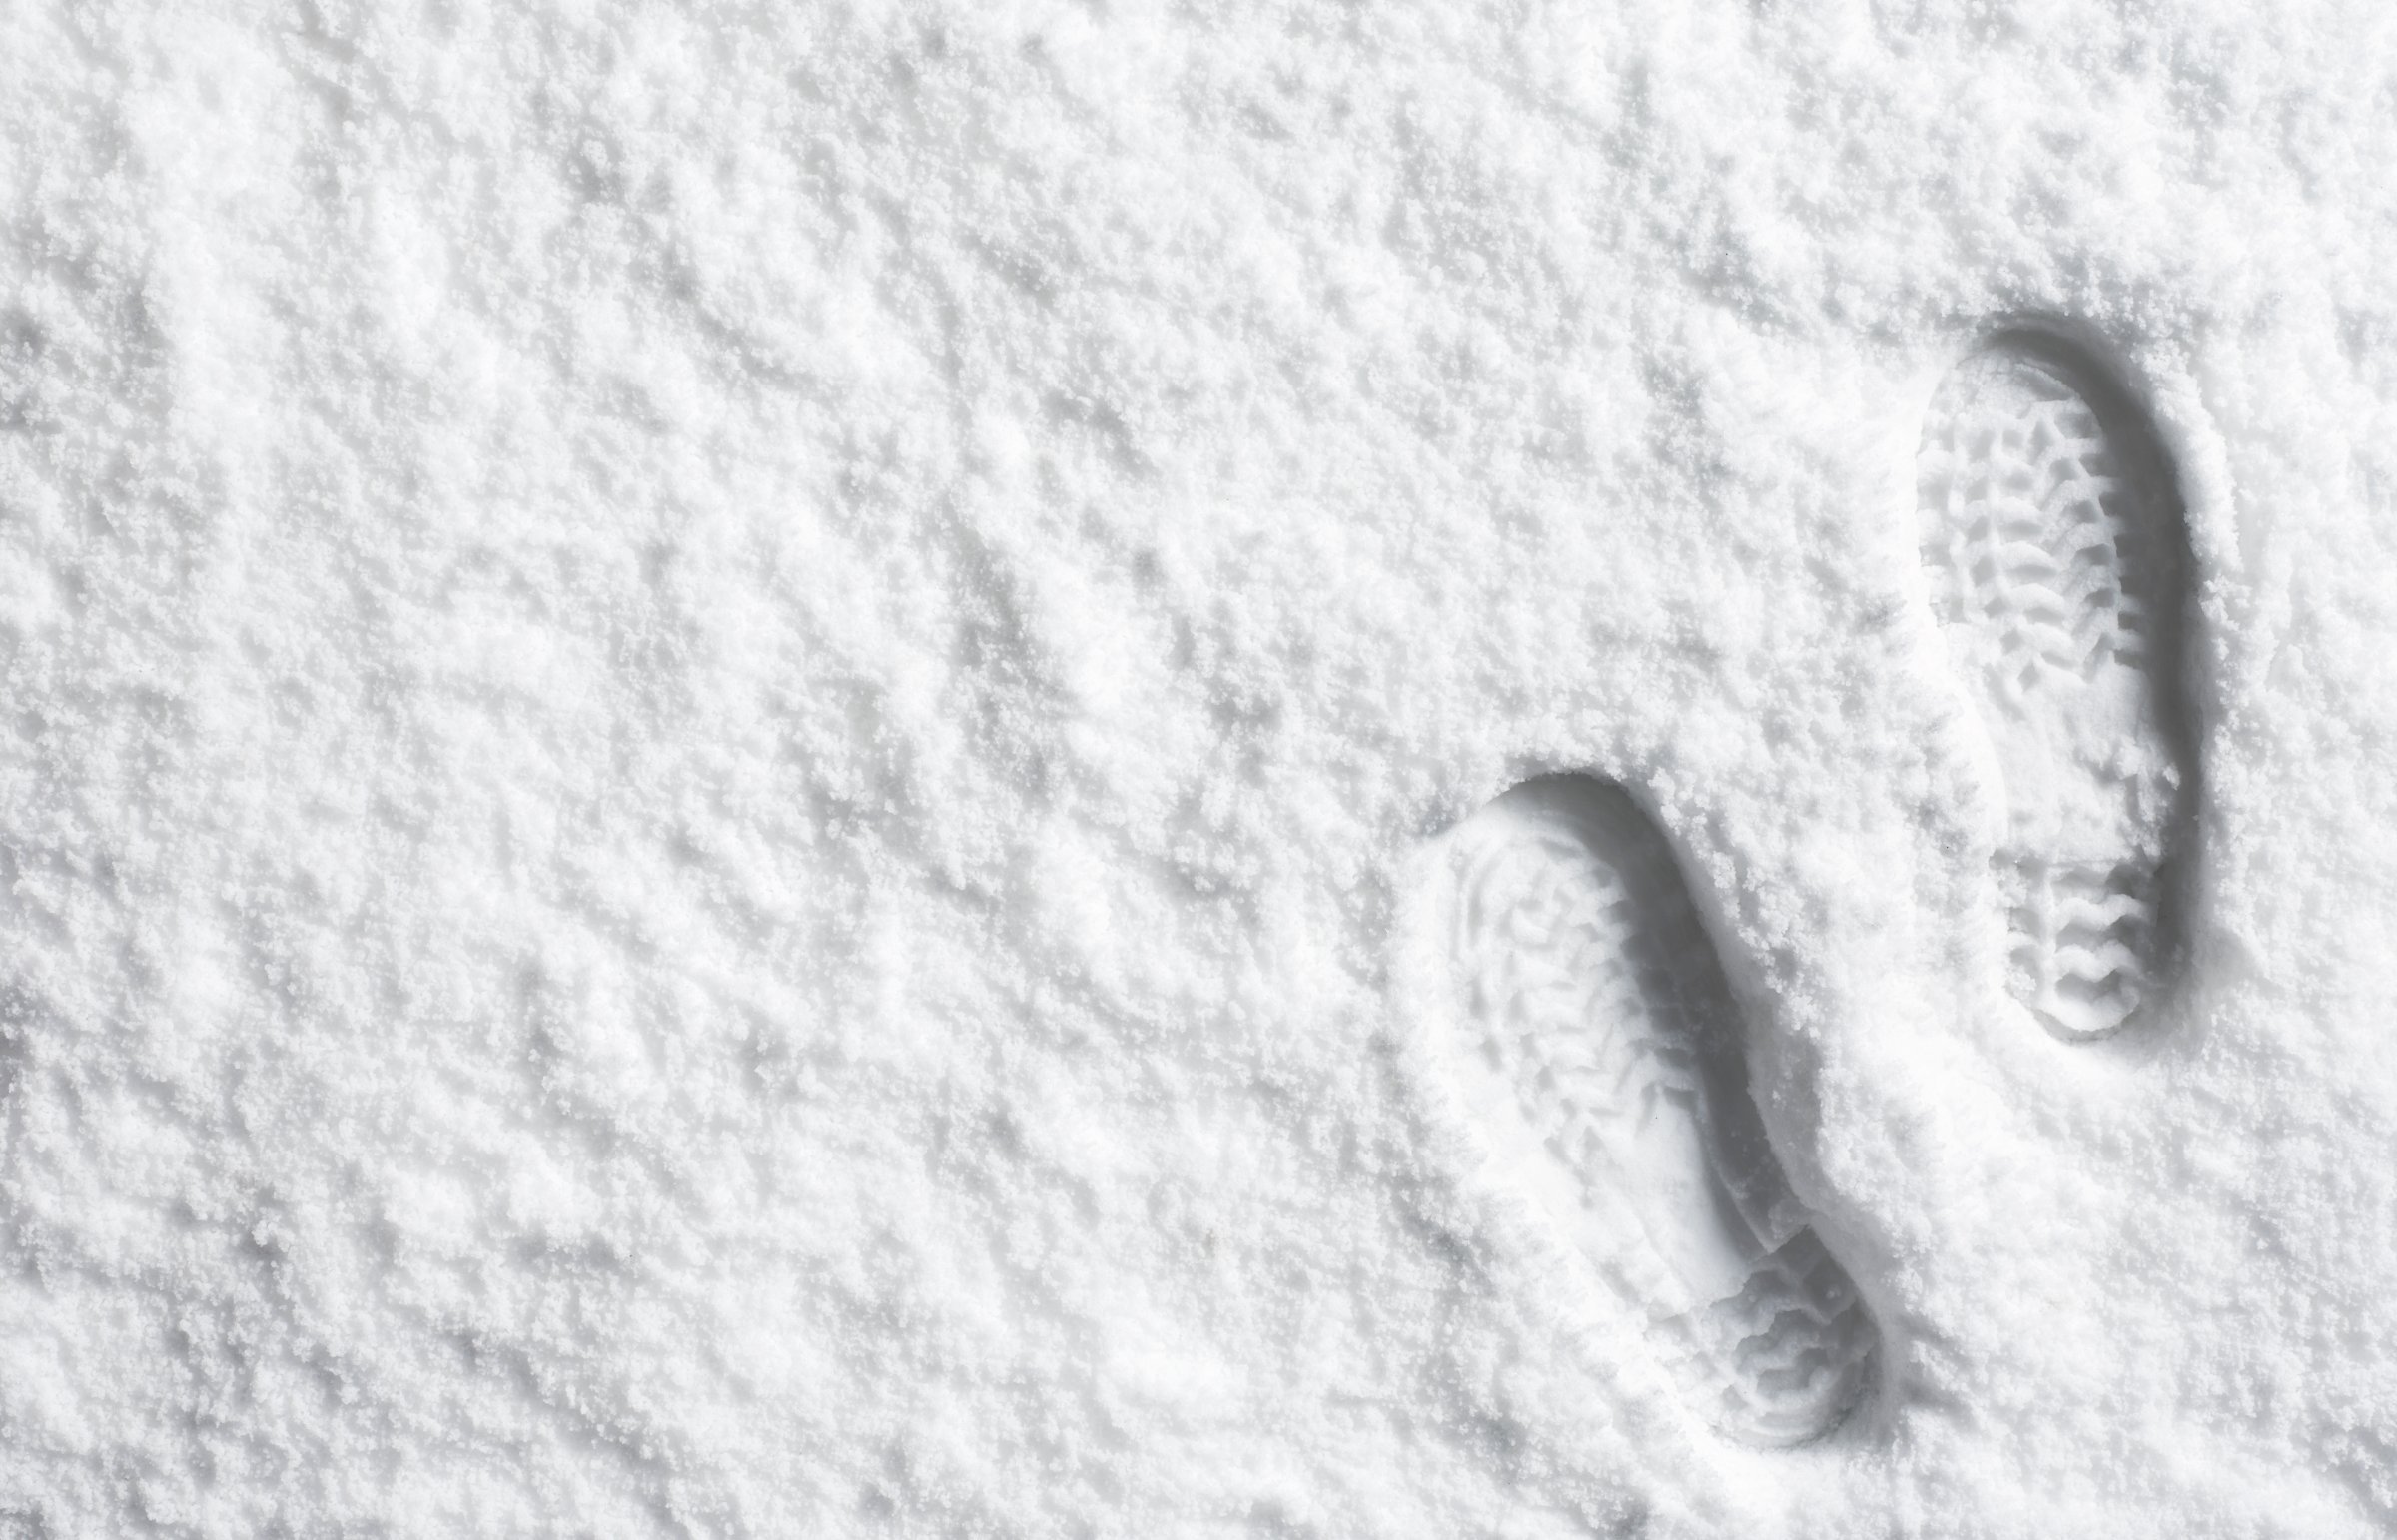 Landscape powder snow scene with foot prints